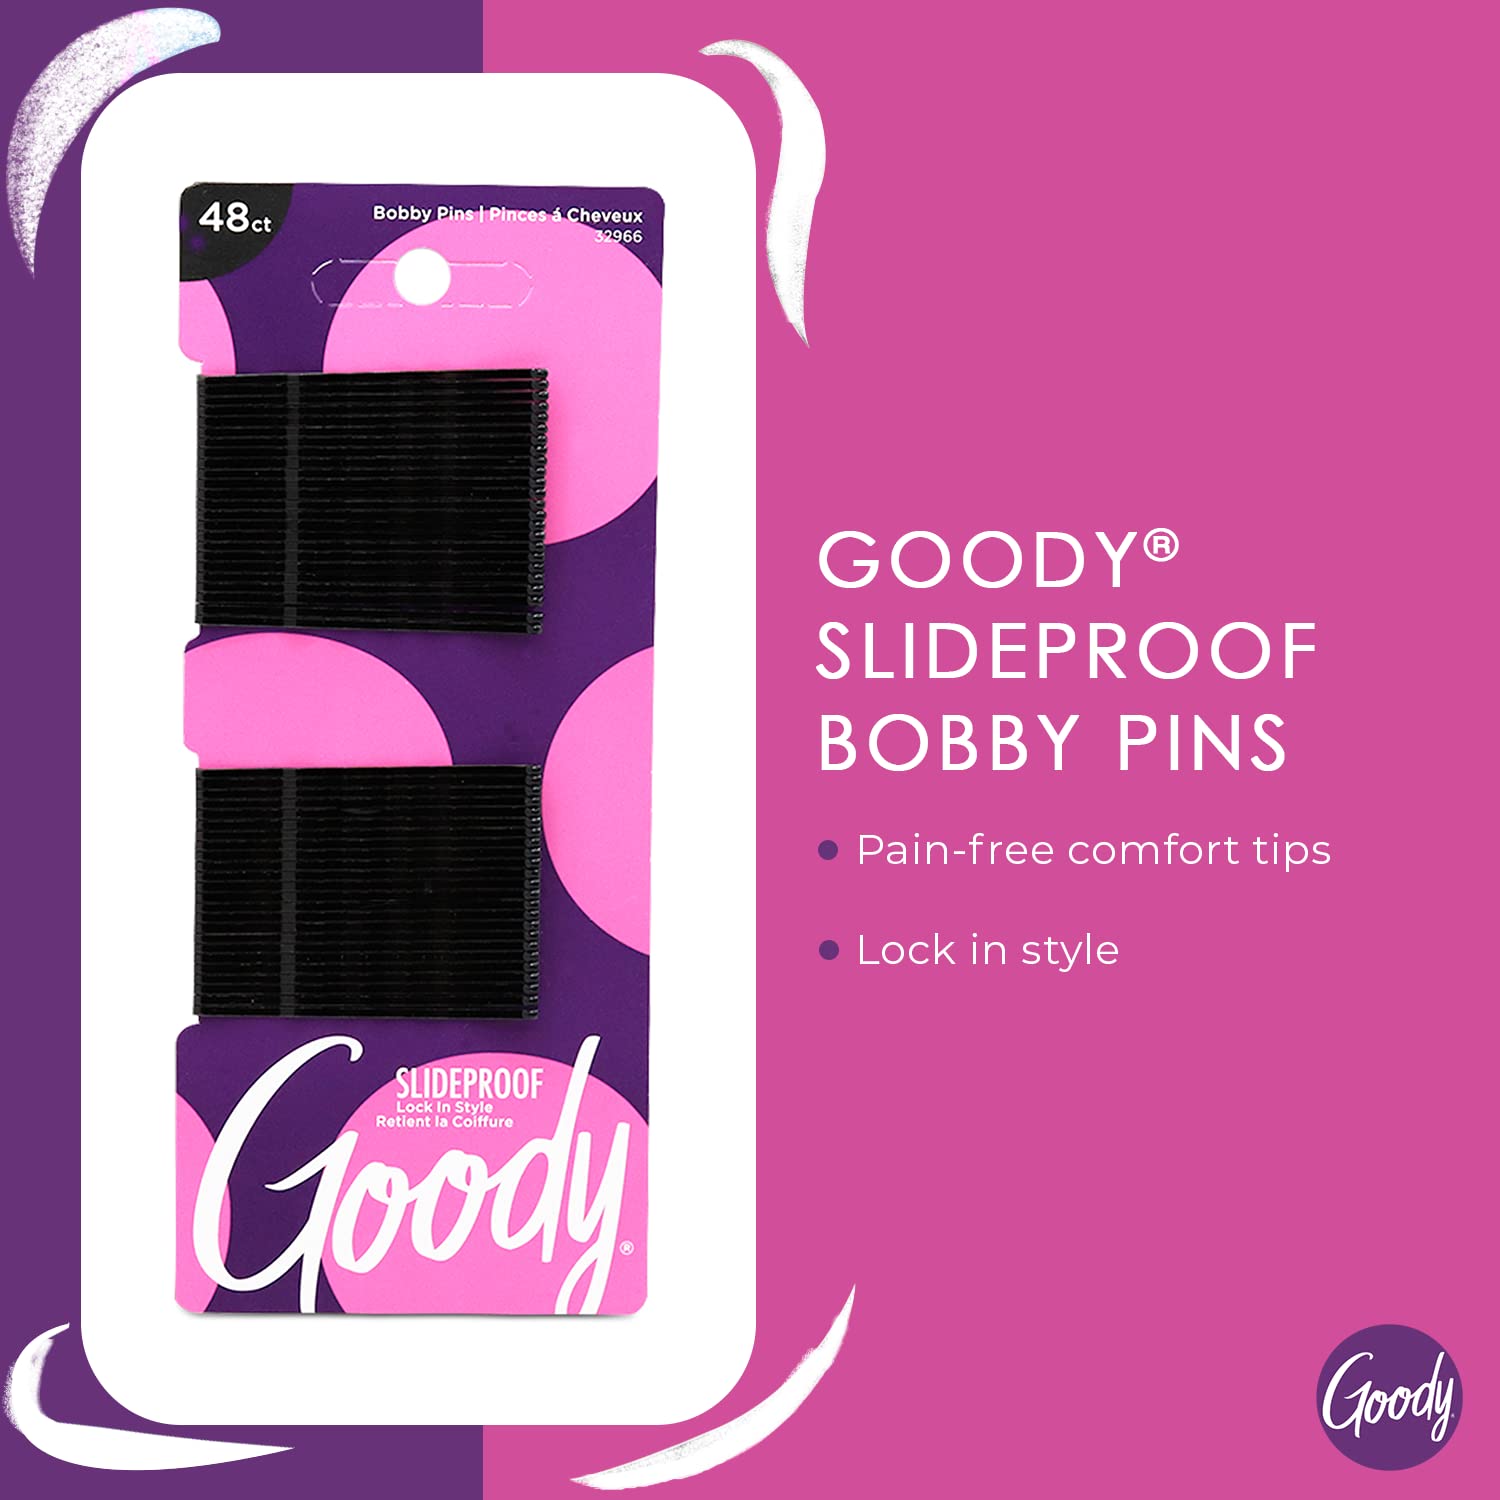 Goody Slideproof Black Bobby Pins UPC:041457329665 Pack:72/6